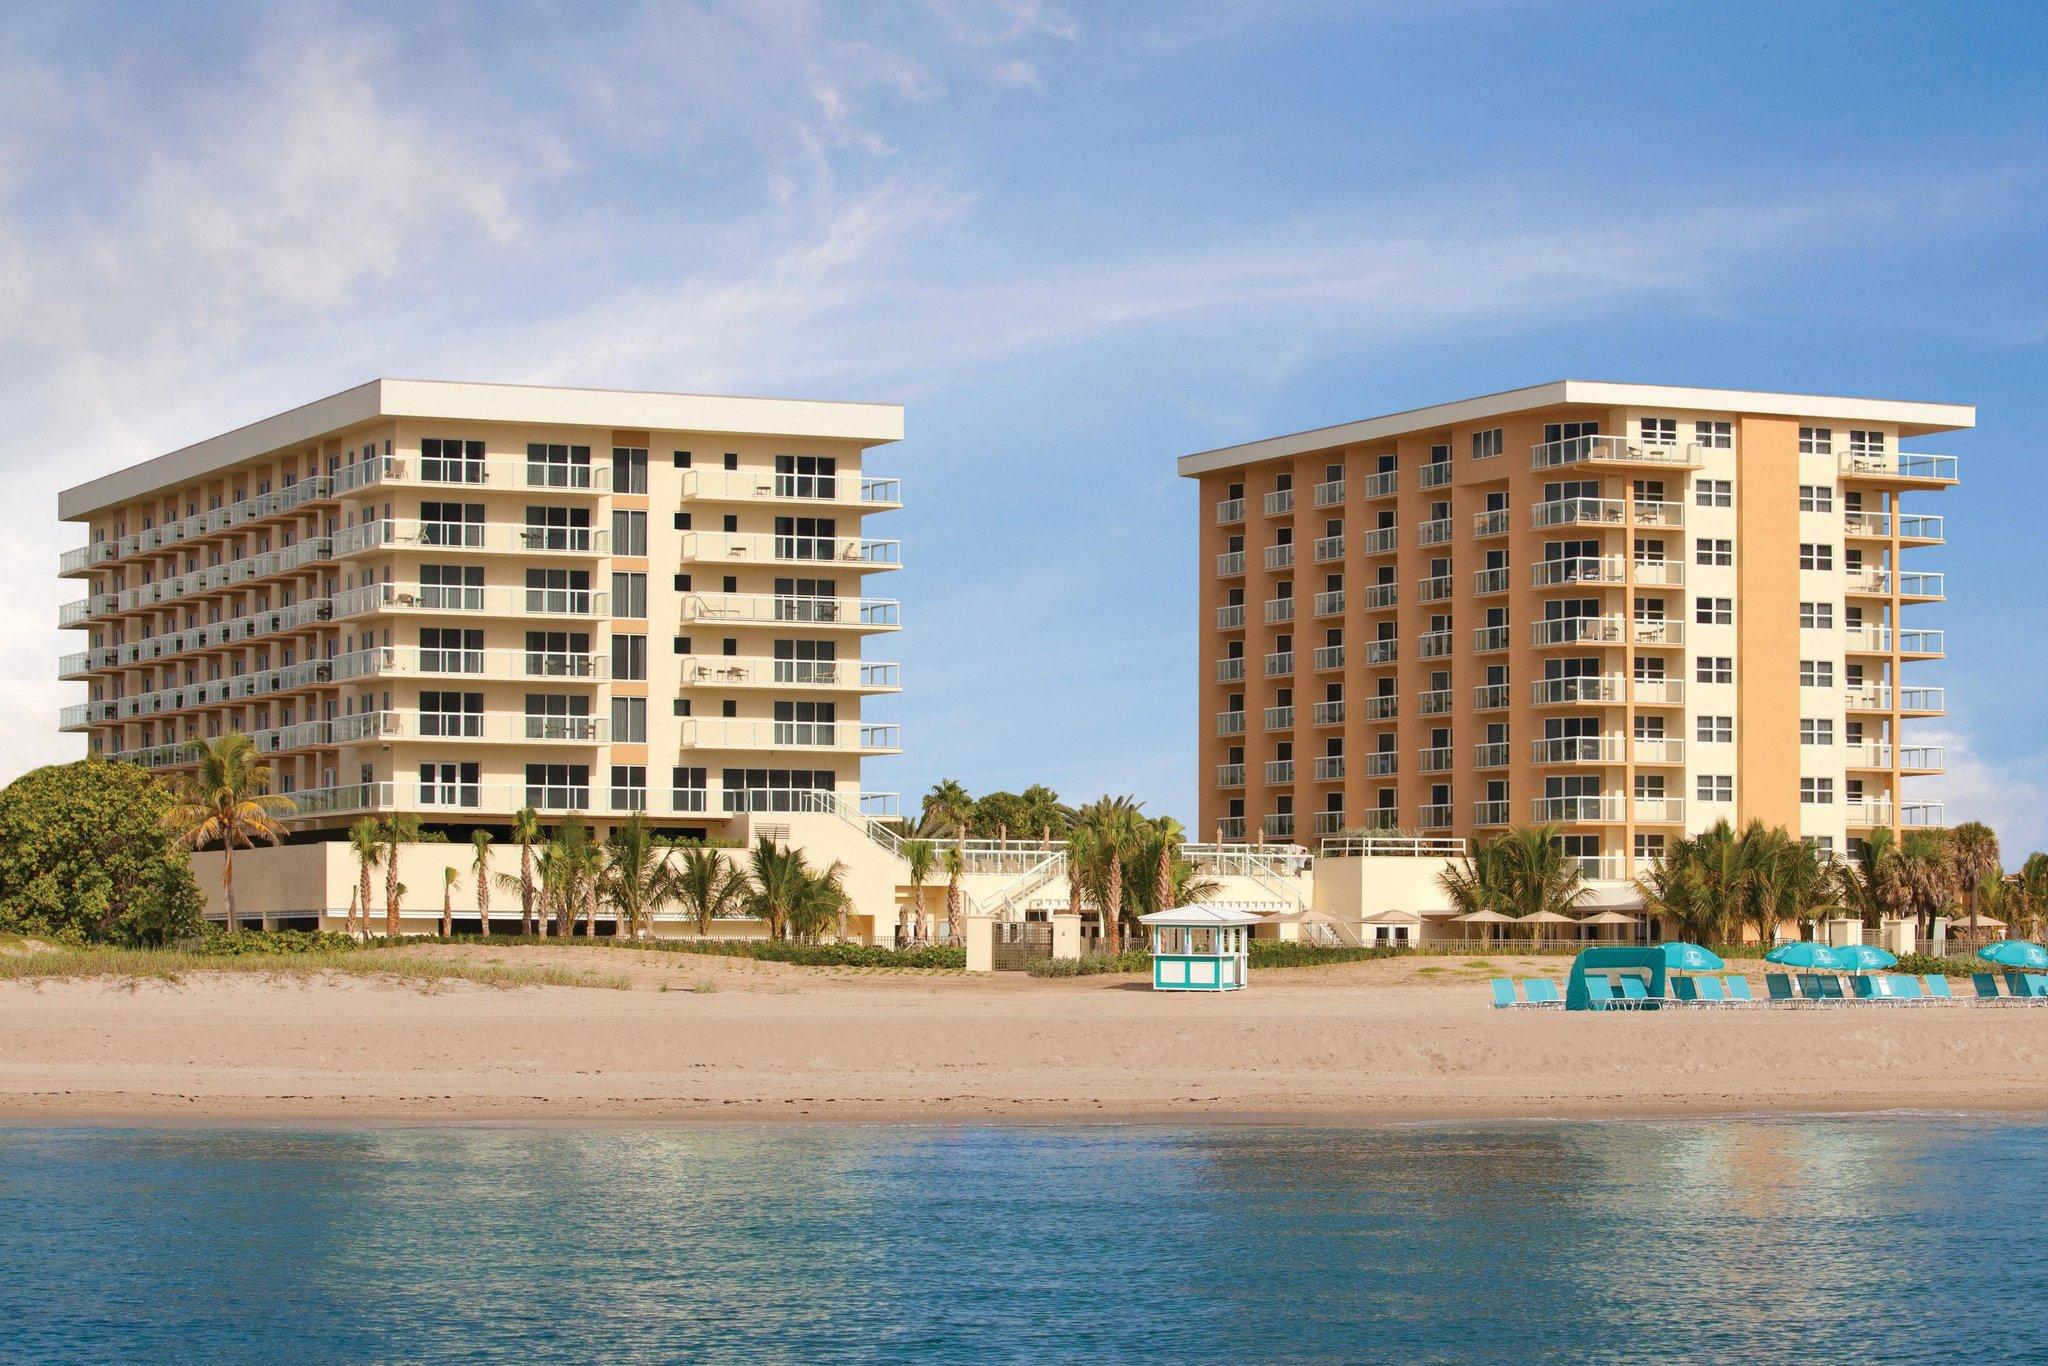 Fort Lauderdale Marriott Pompano Beach Resort & Spa in Pompano Beach, FL